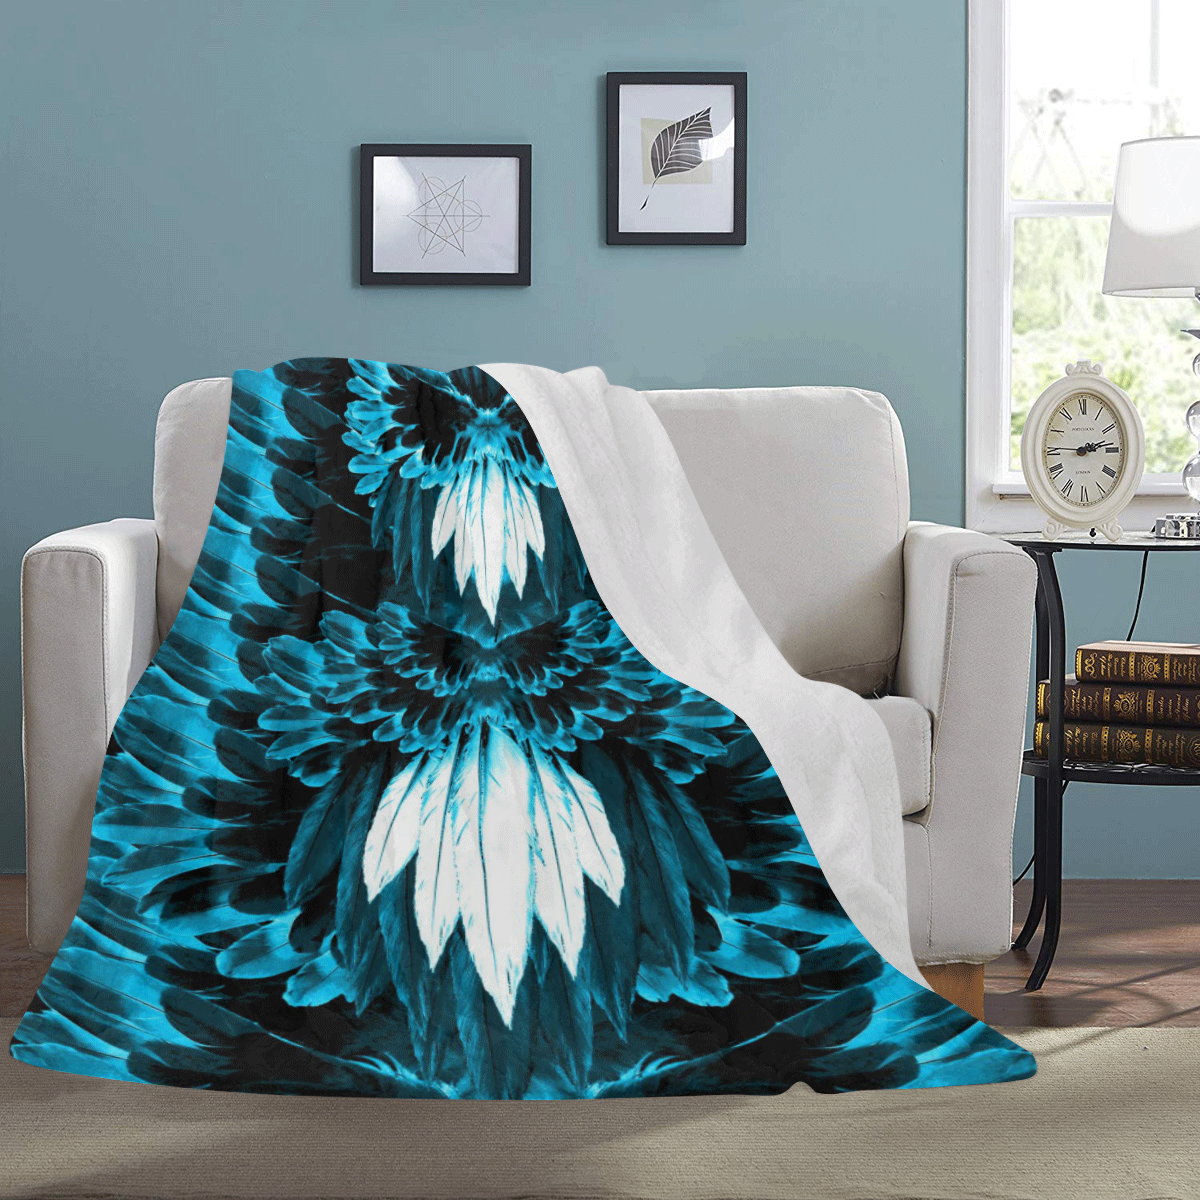 feathers34 Ultra-Soft Micro Fleece Blanket 60"x80"